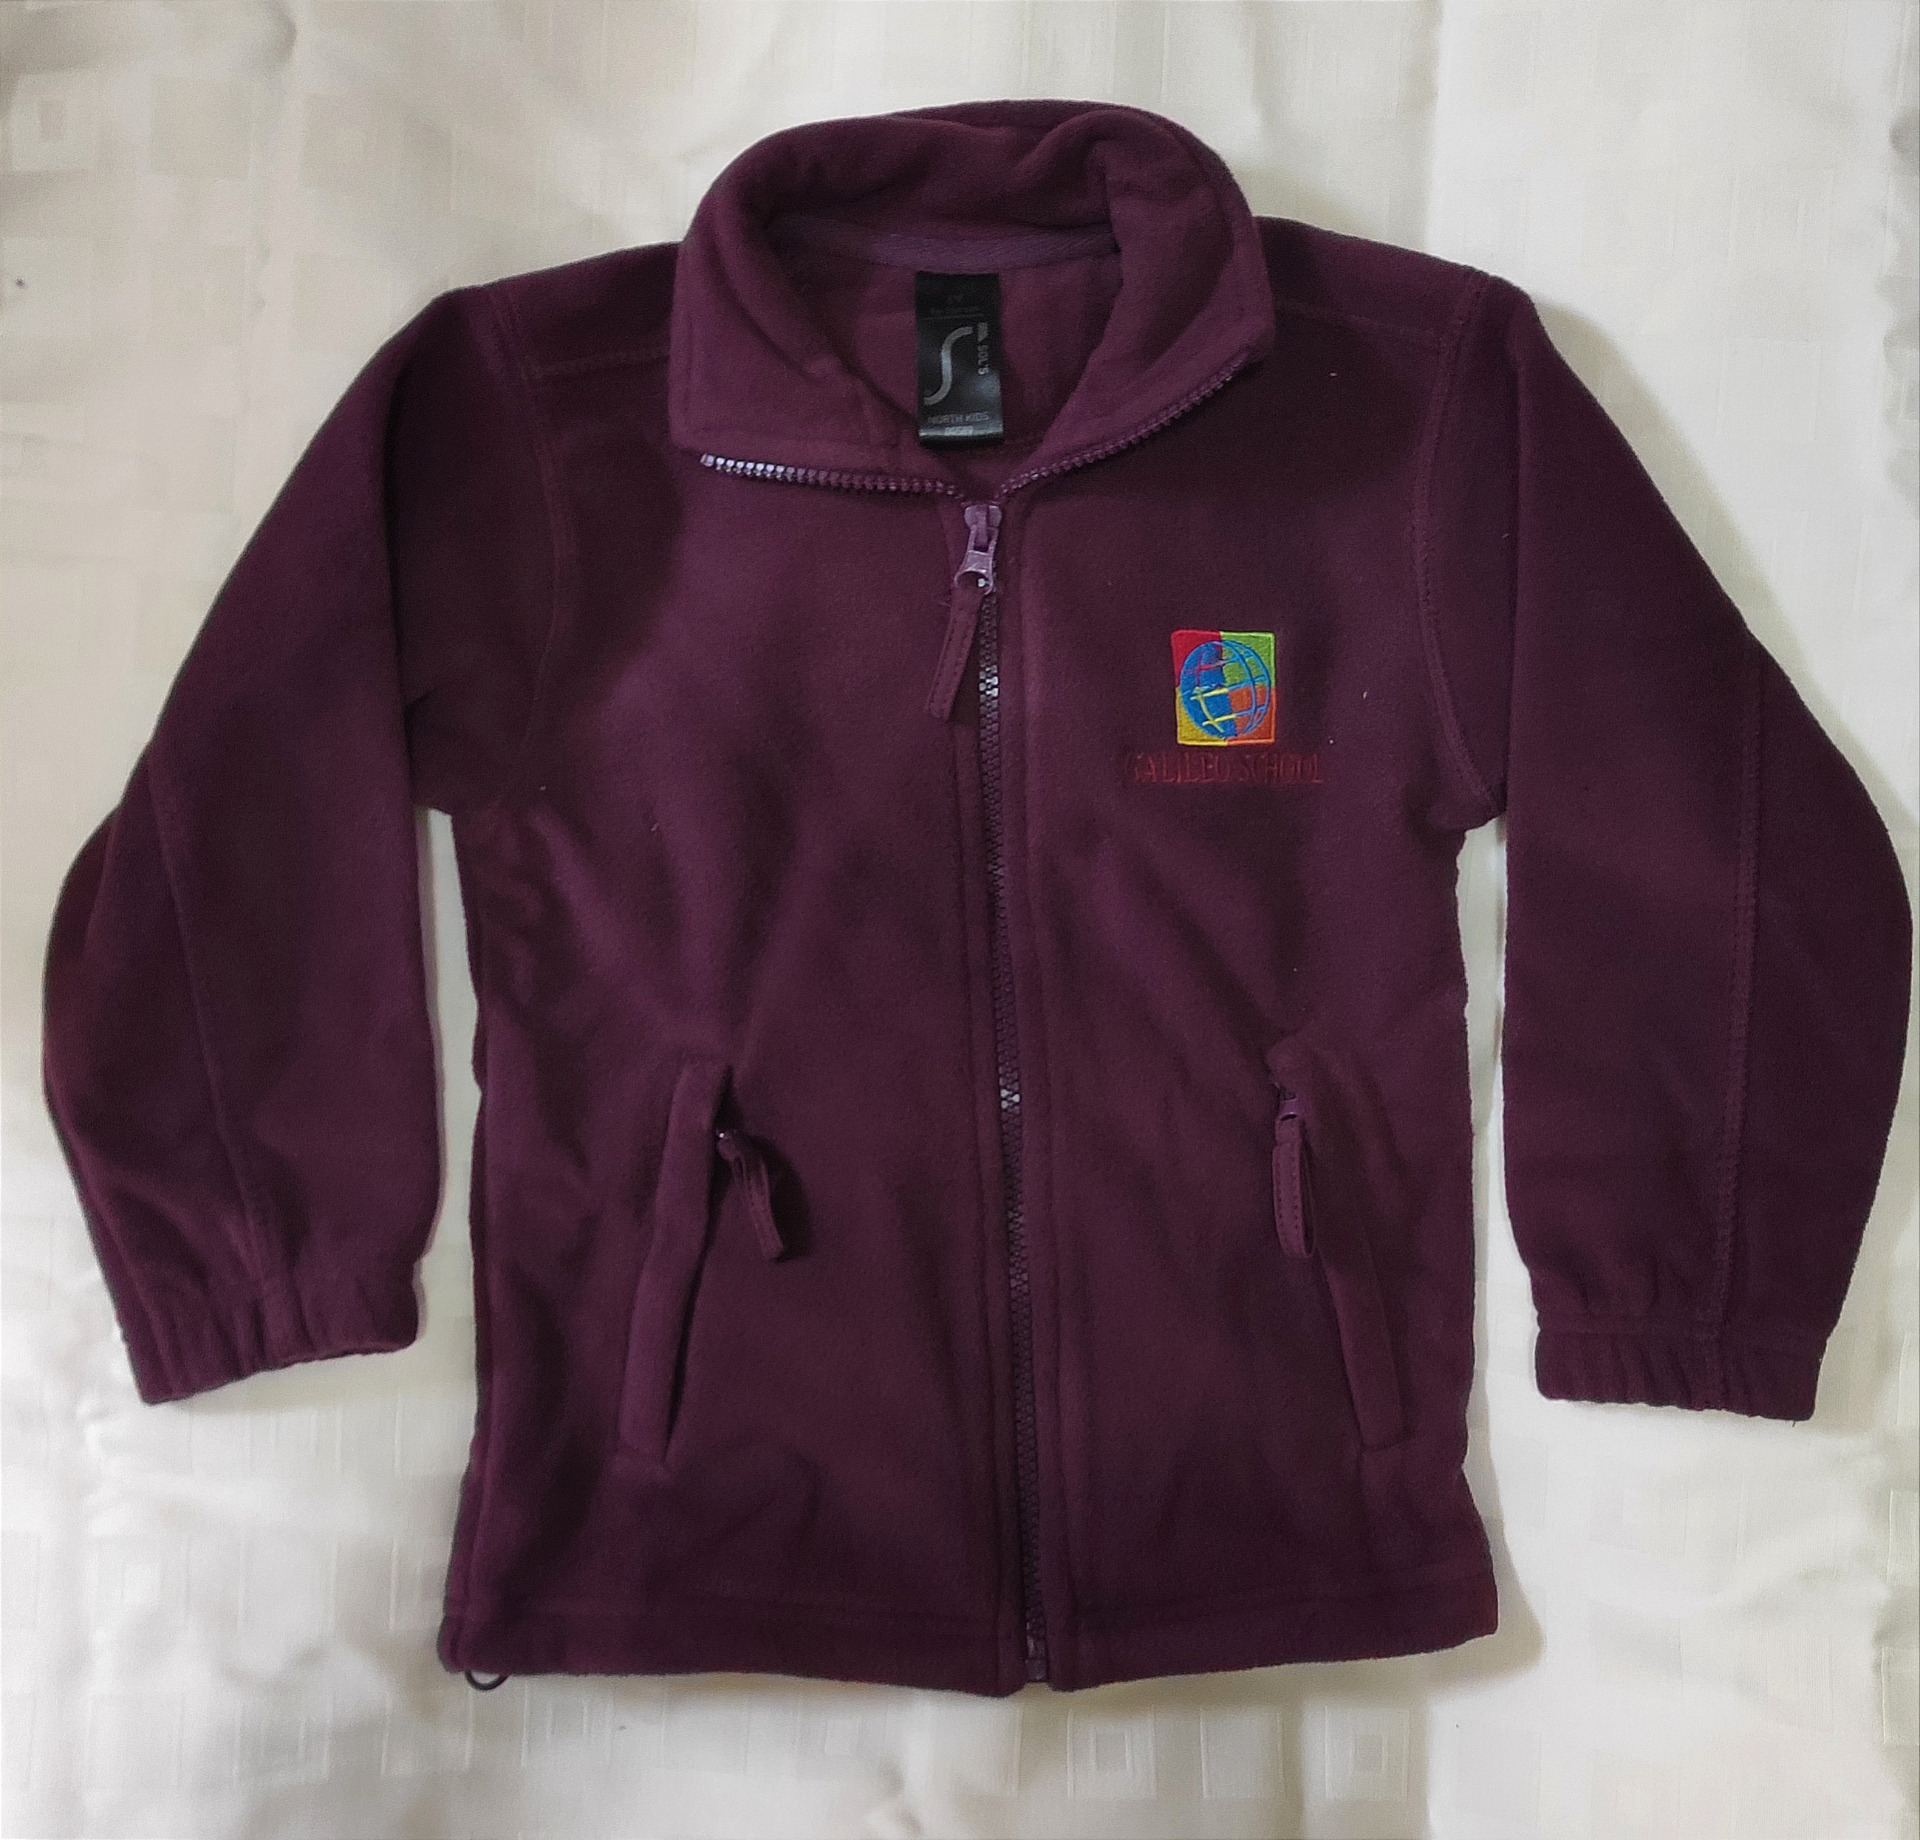 mikina hrubá - flis, dlhý zips - bordová / fleece sweatshirt thick, long zip - burgundy; 

cena / price: 26€